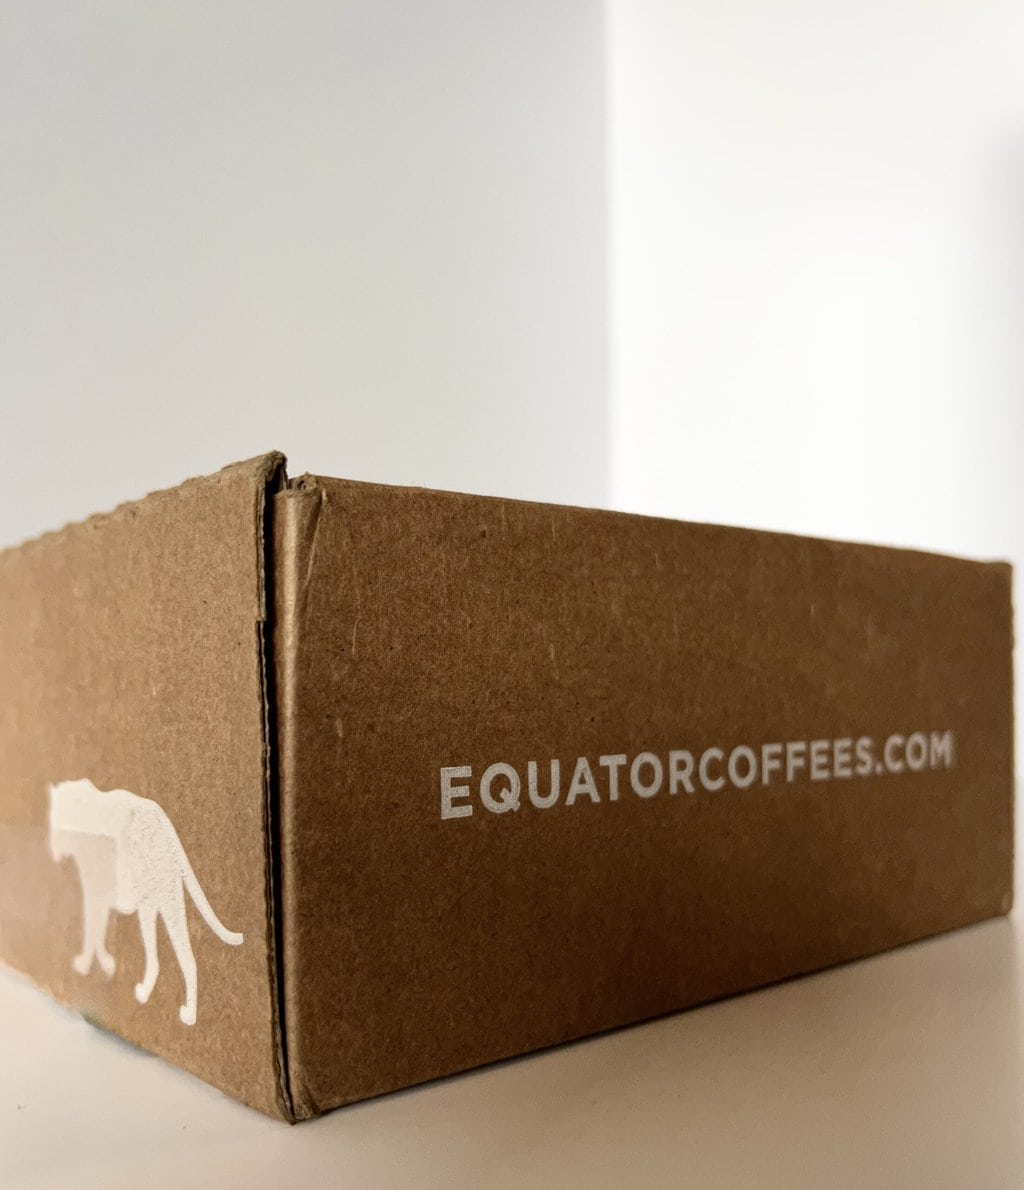 Equator Coffees box